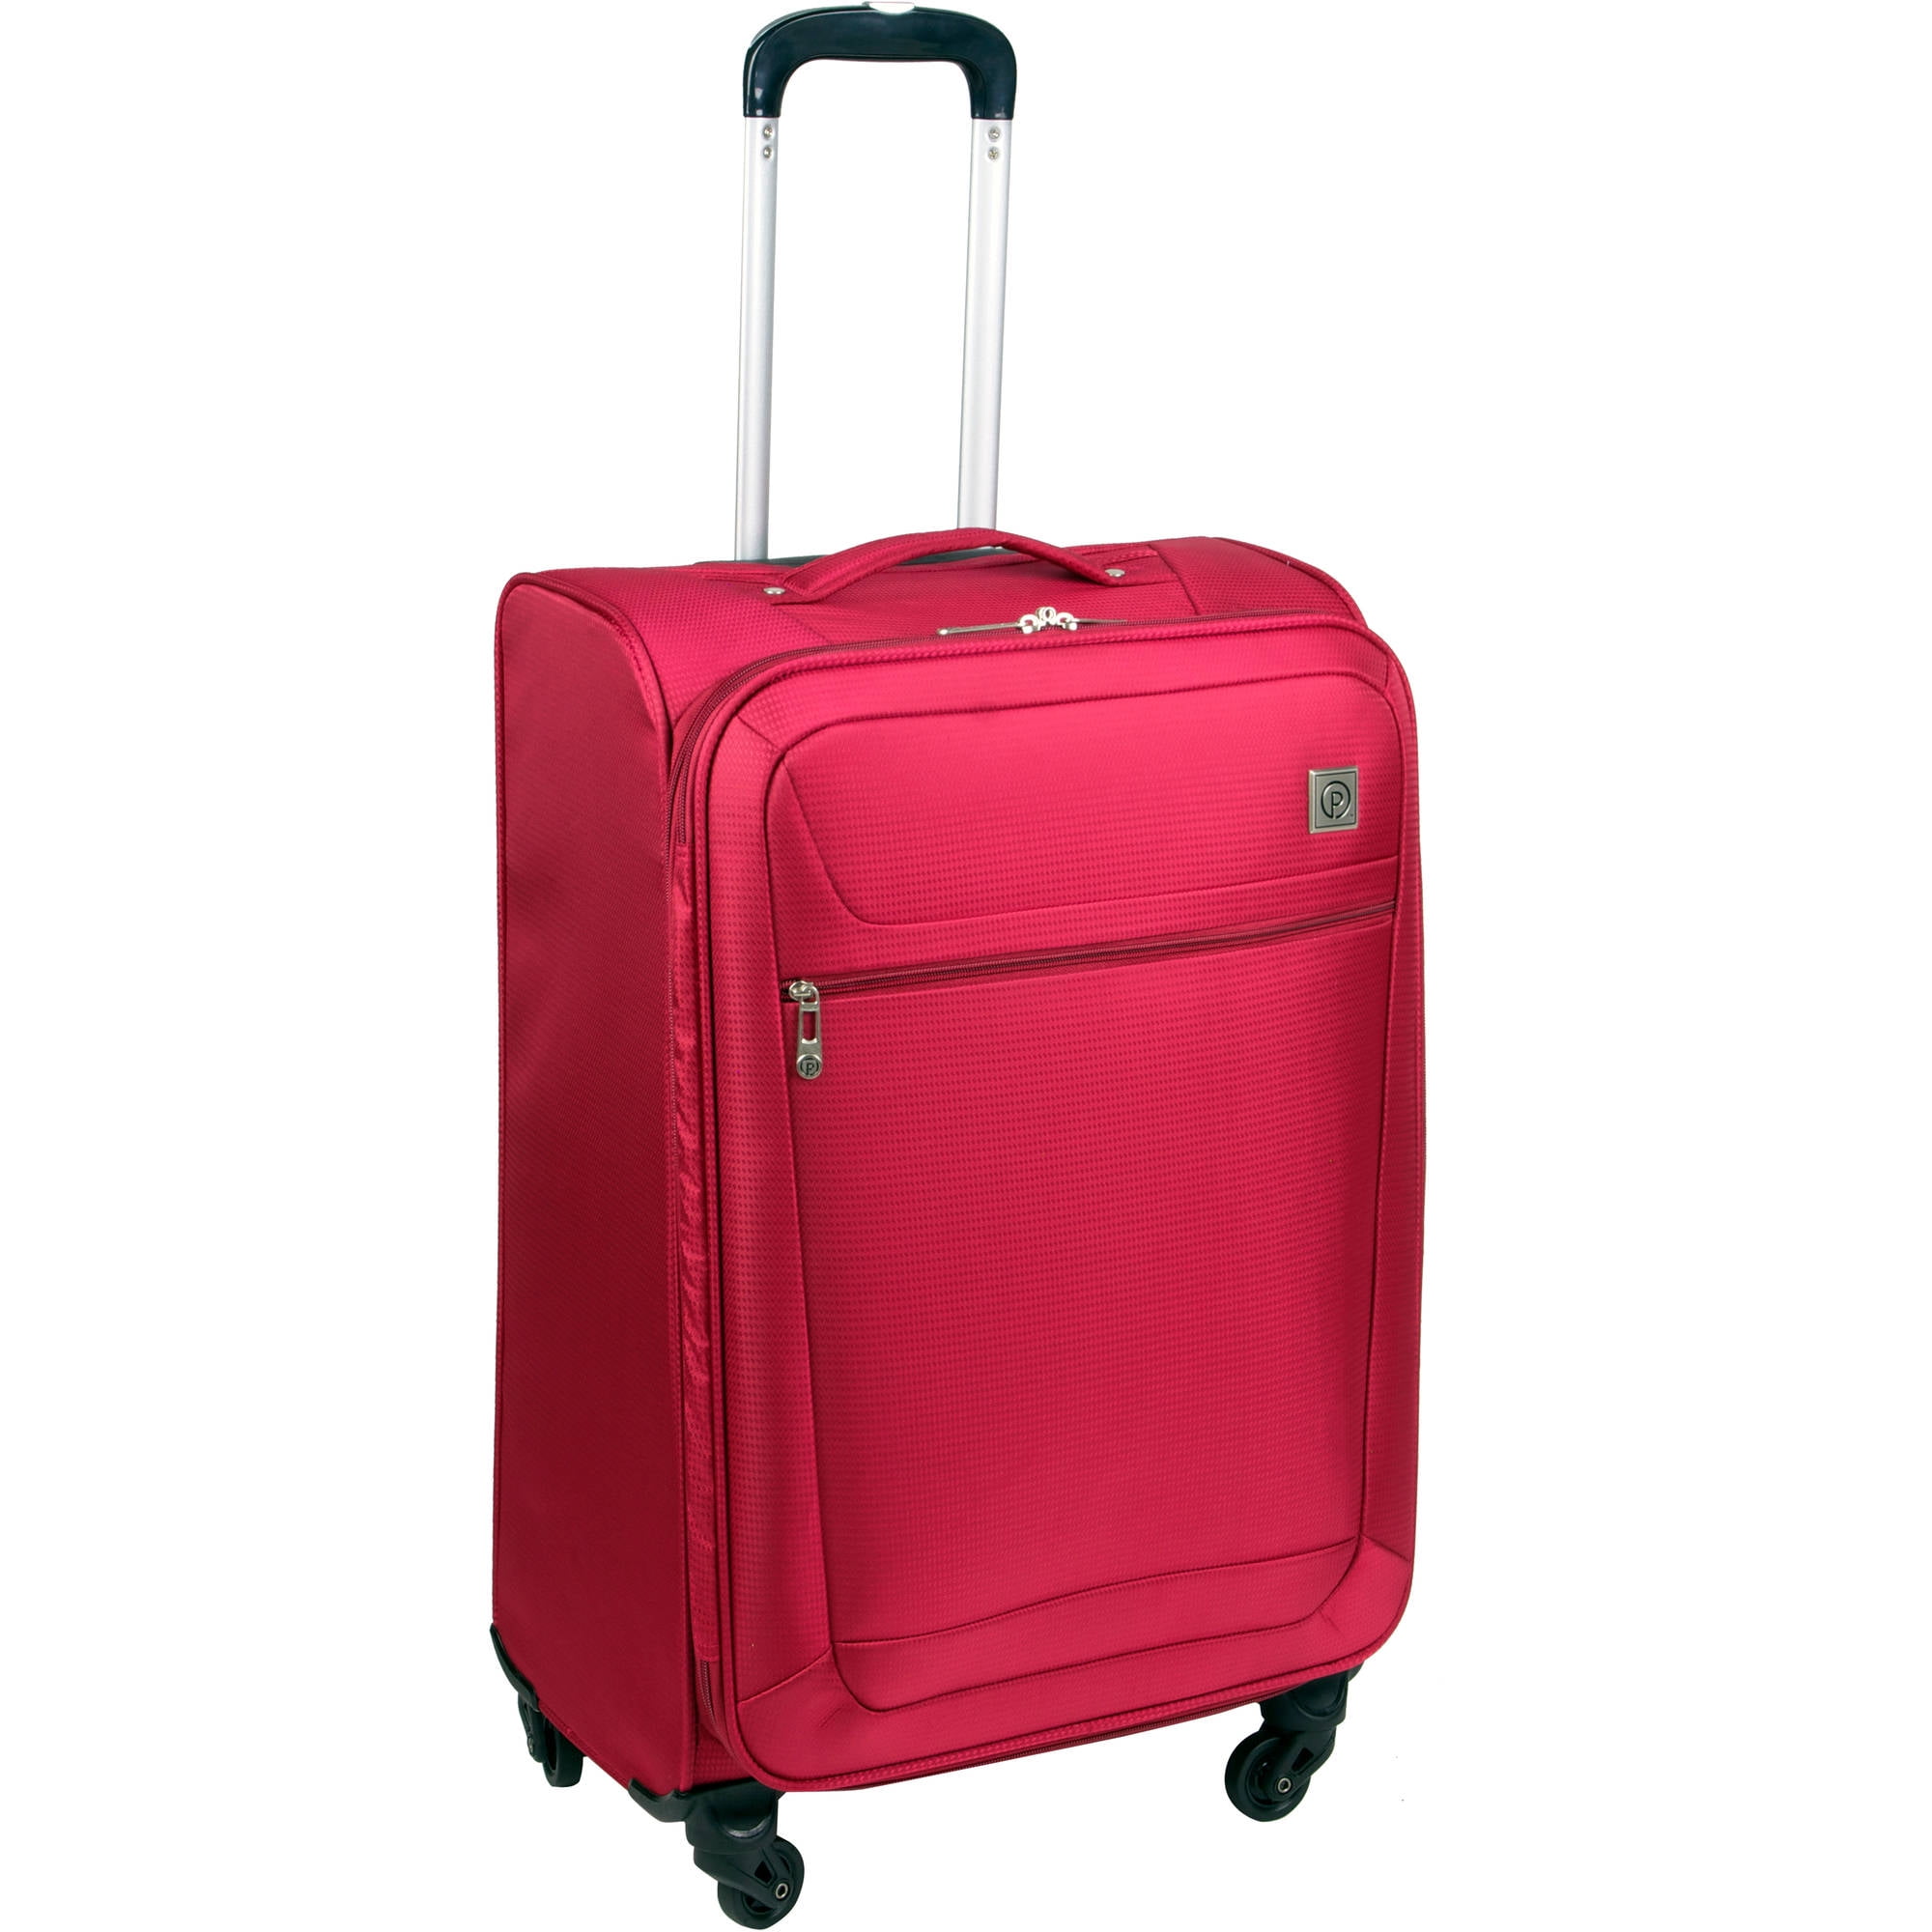 Protege Vapor Lightweight Rolling Suitcase, Red - Walmart.com